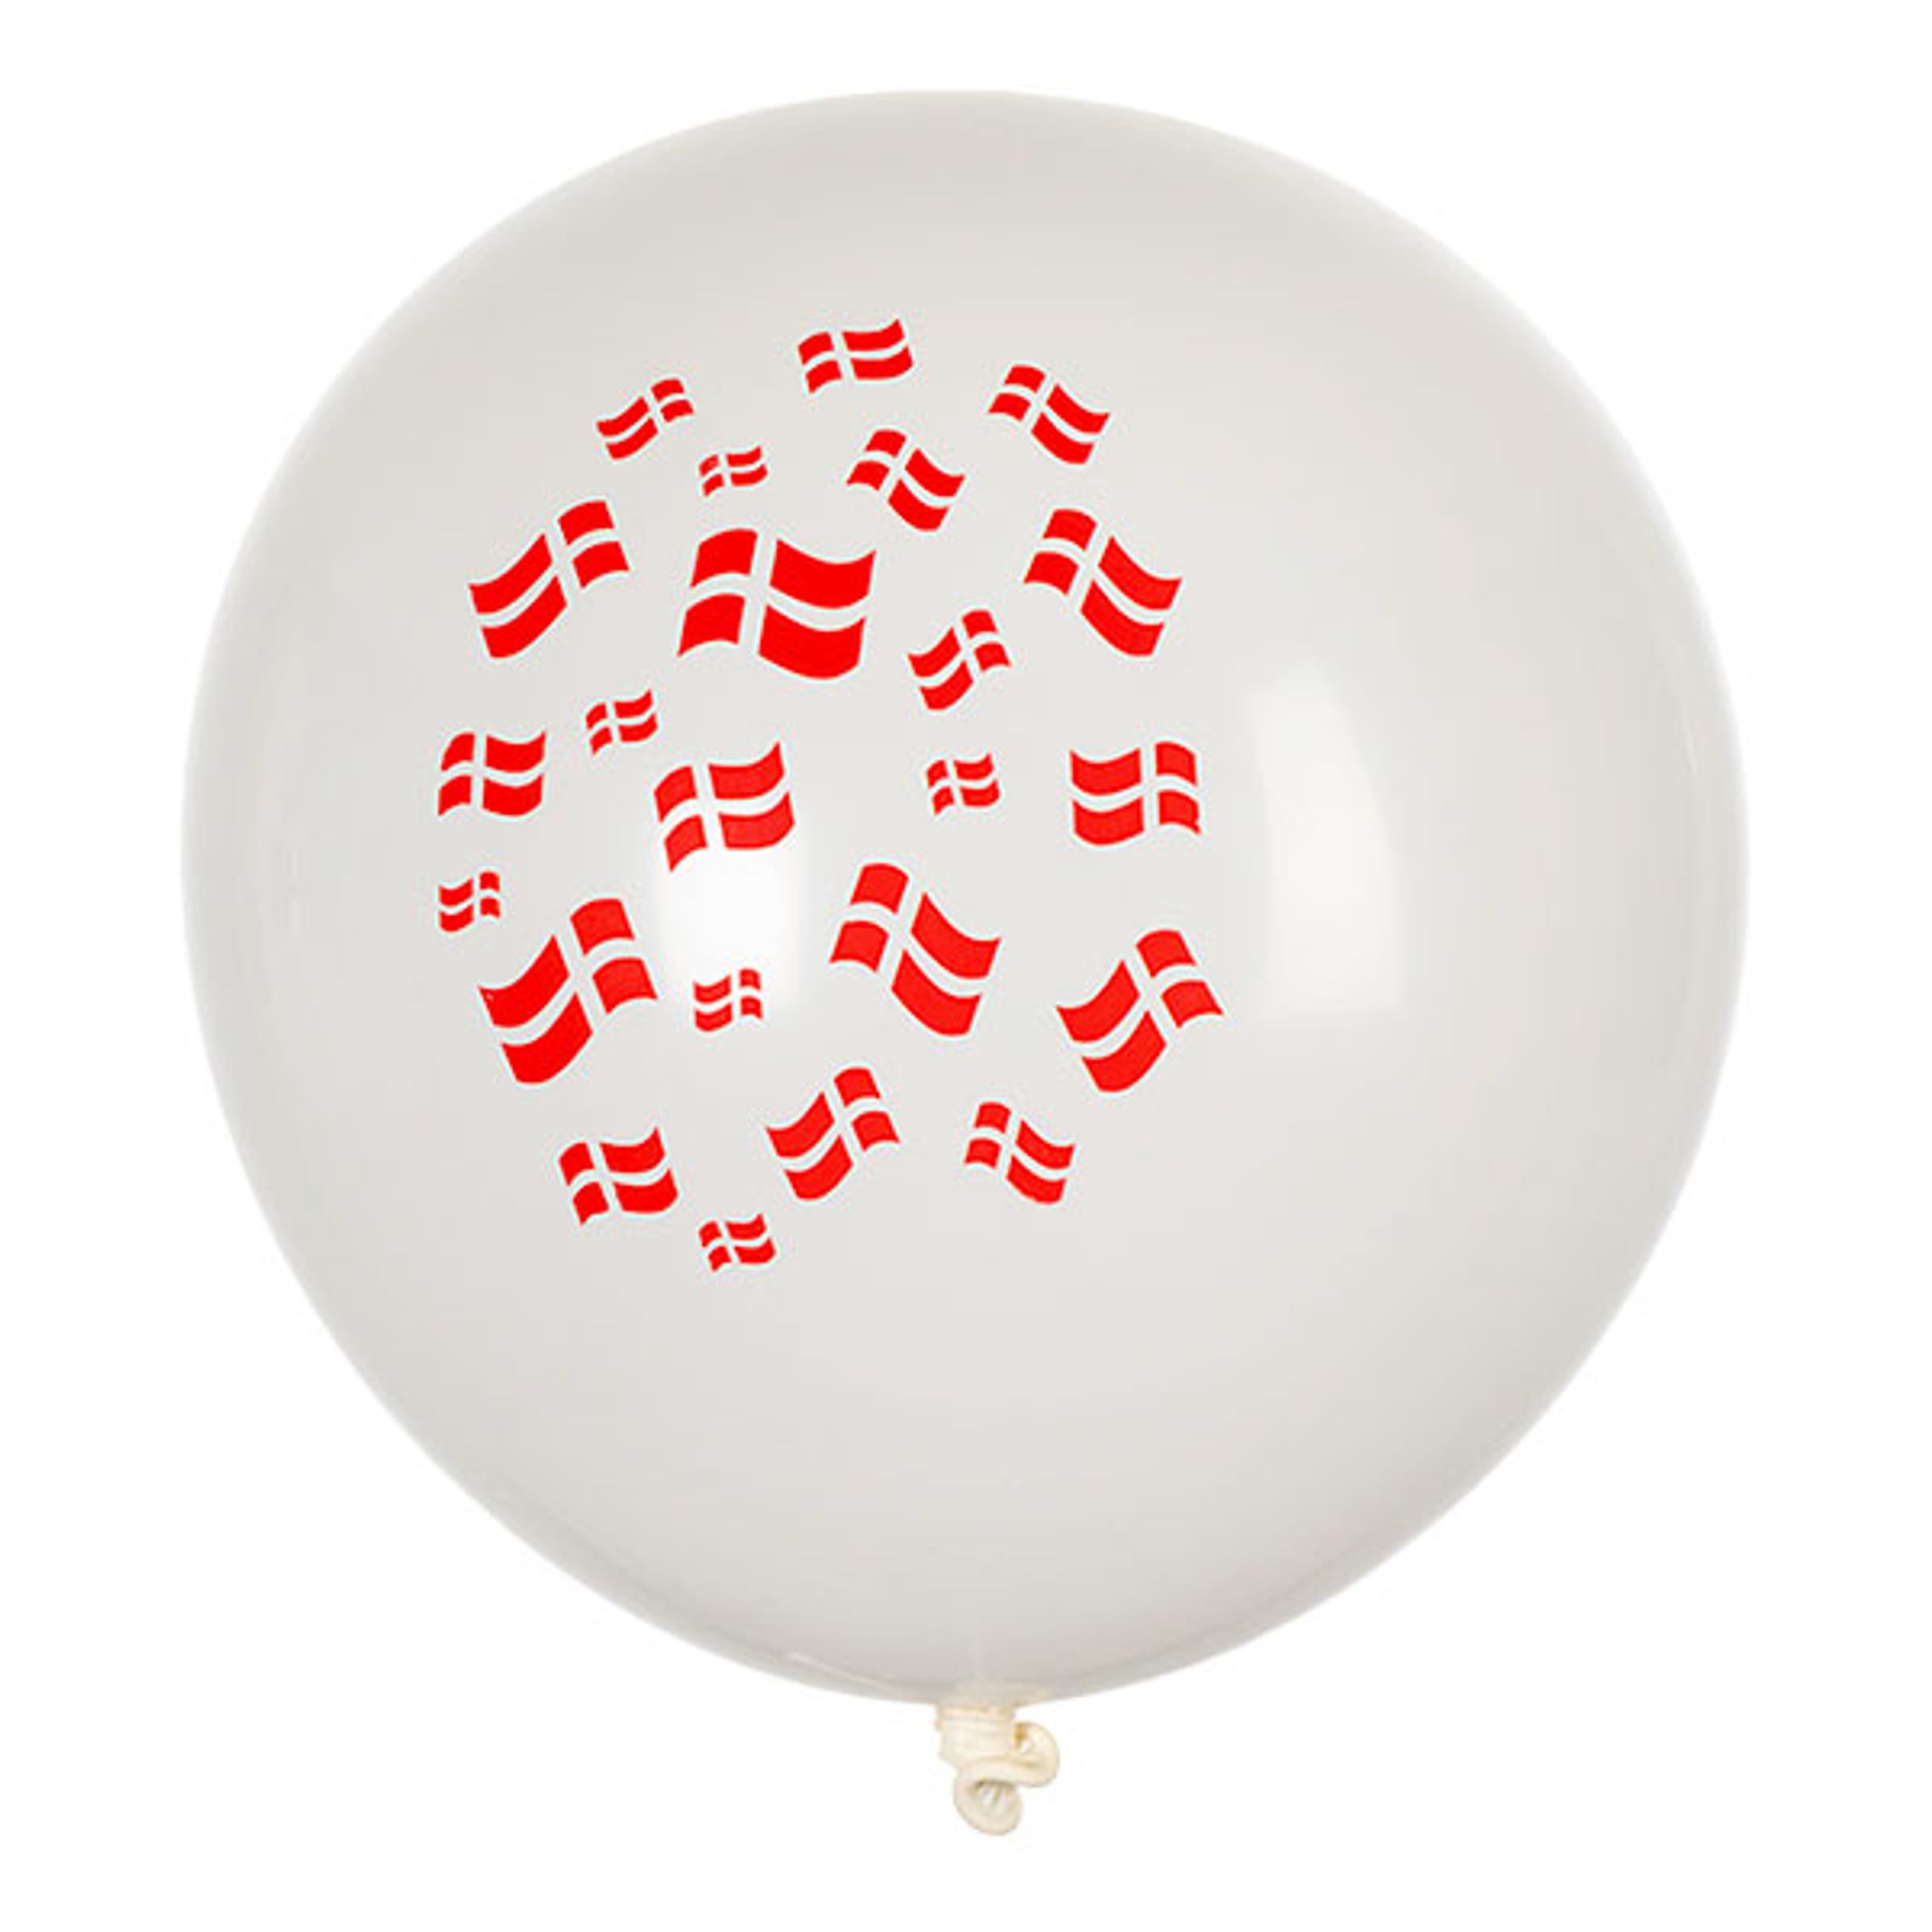 Ballonger Danska Flaggan - 8-pack